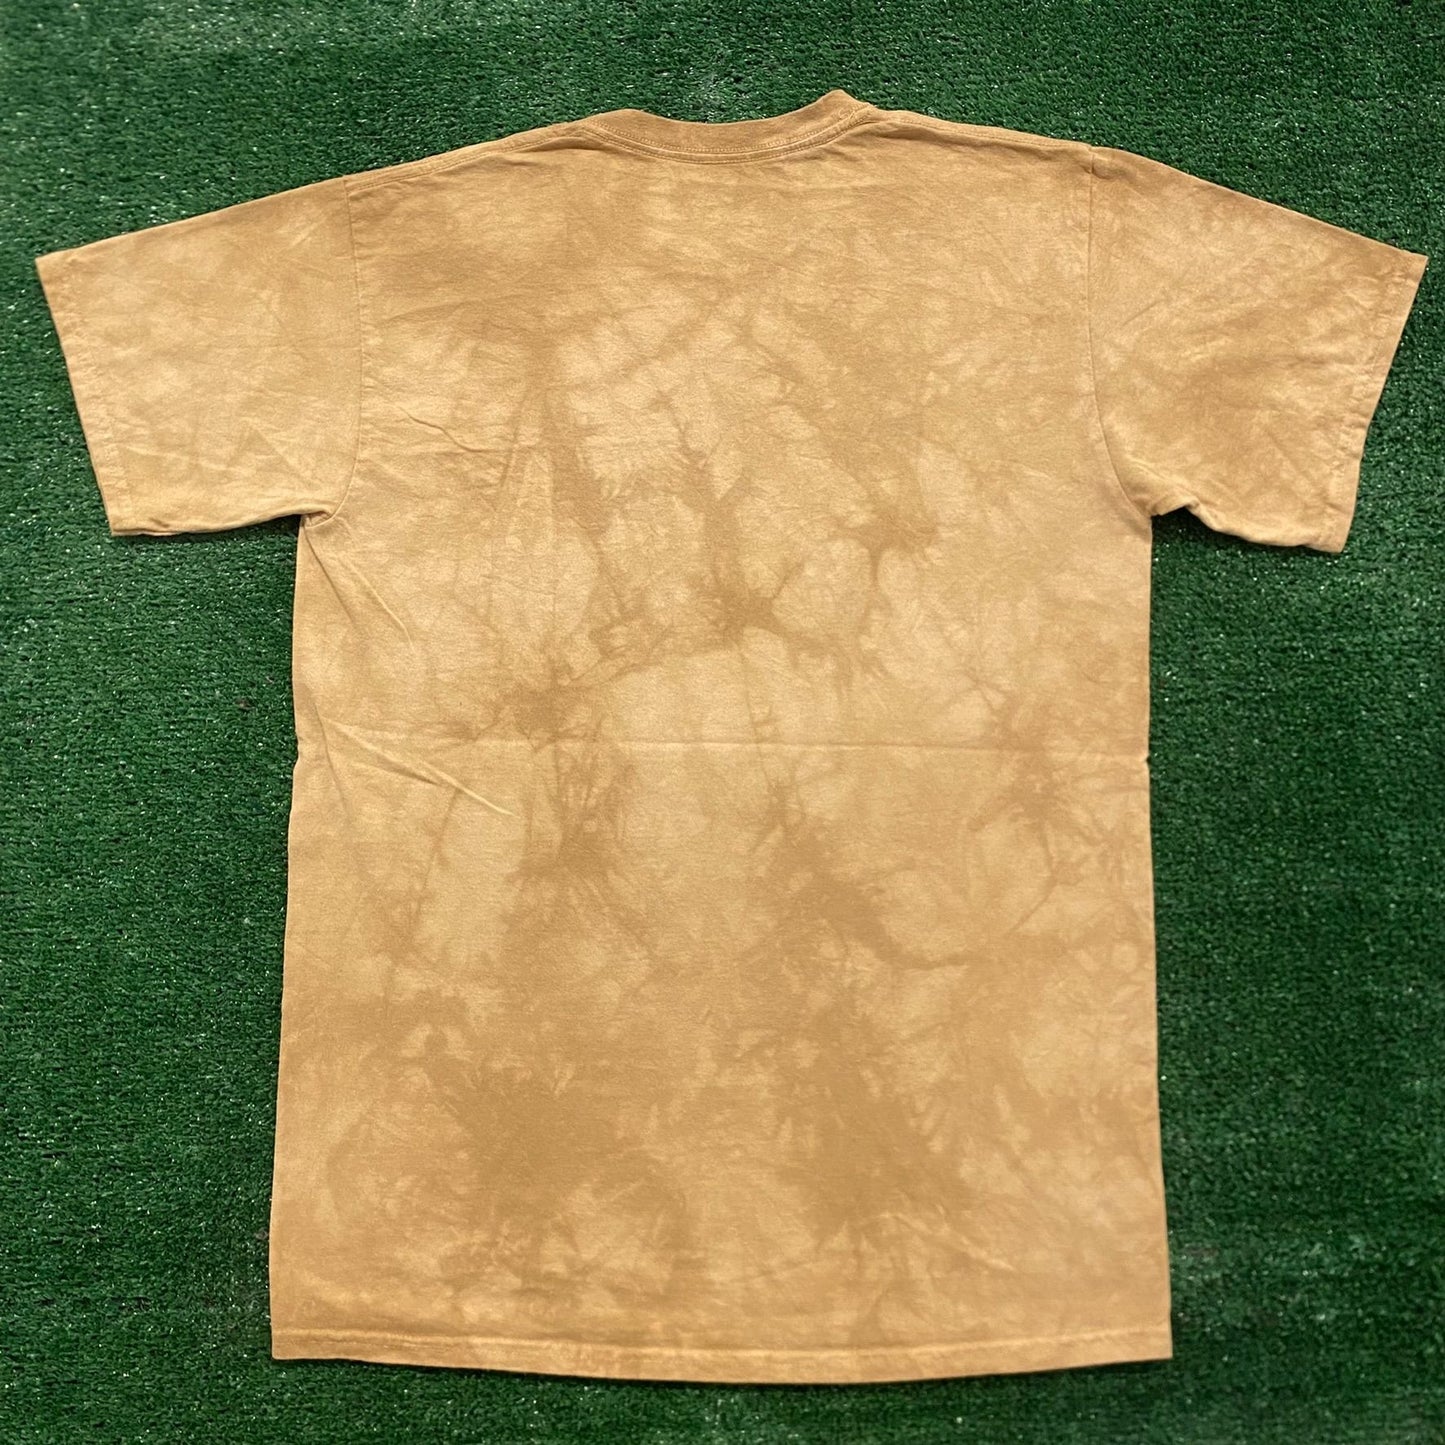 Vintage Y2K Essential The Mountain Corgi Dog Face T-Shirt